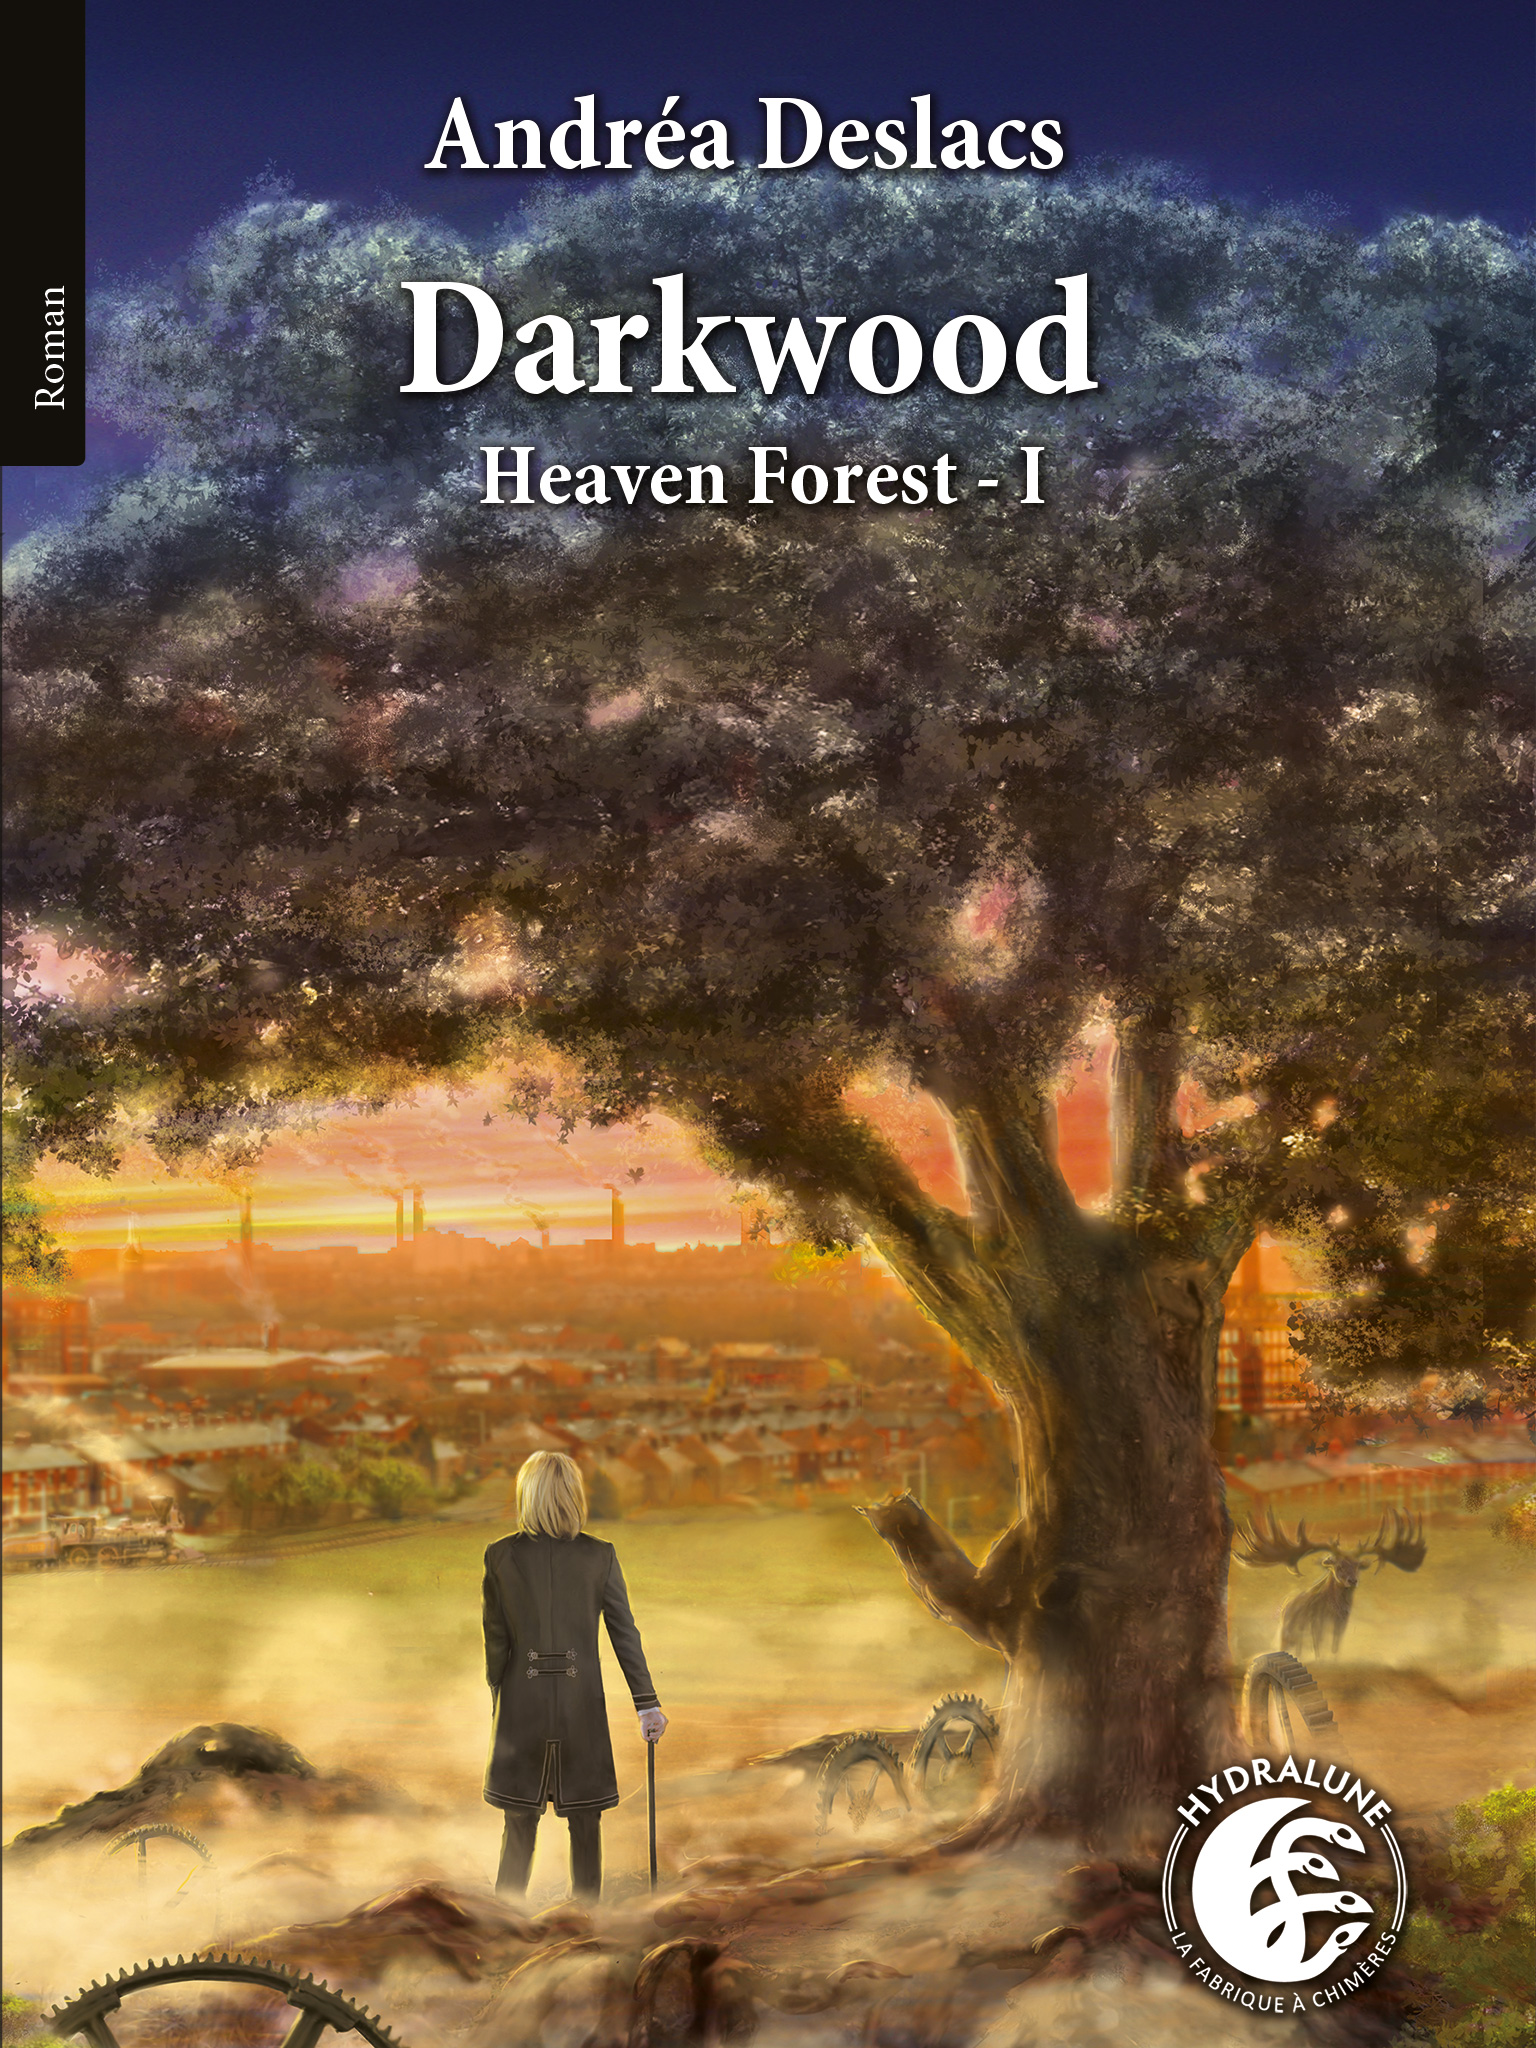 heaven-forest-darkwood-andrea-deslacs